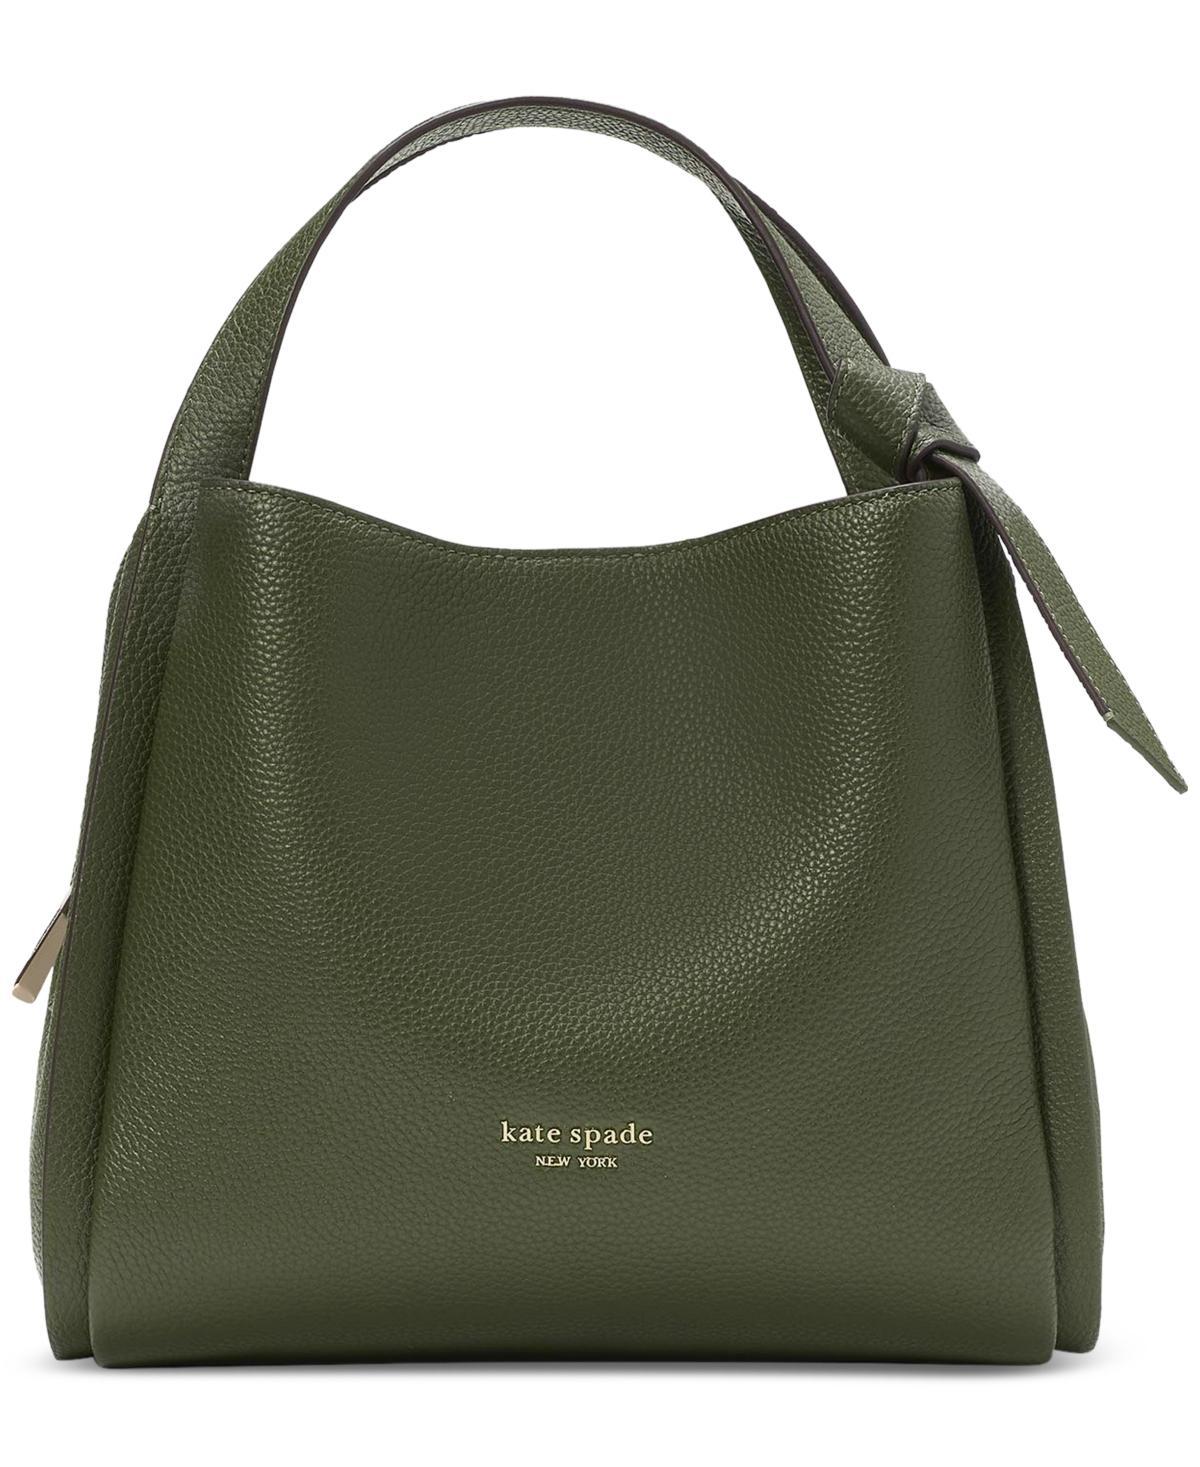 kate spade new york knott large colorblock leather handbag Product Image